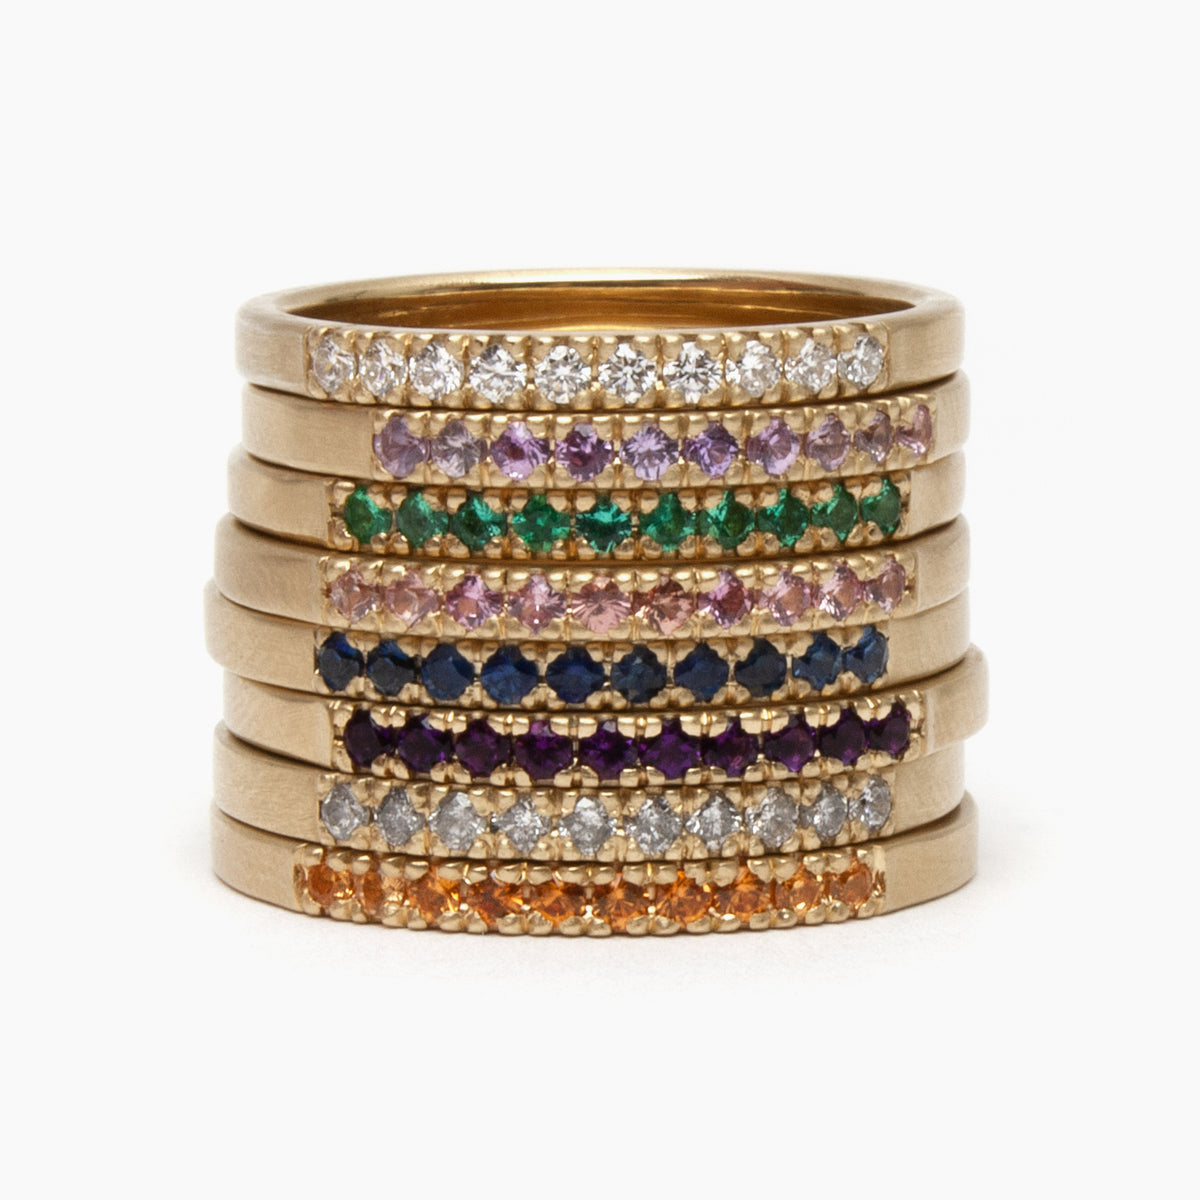 Asa ring - colored gemstones